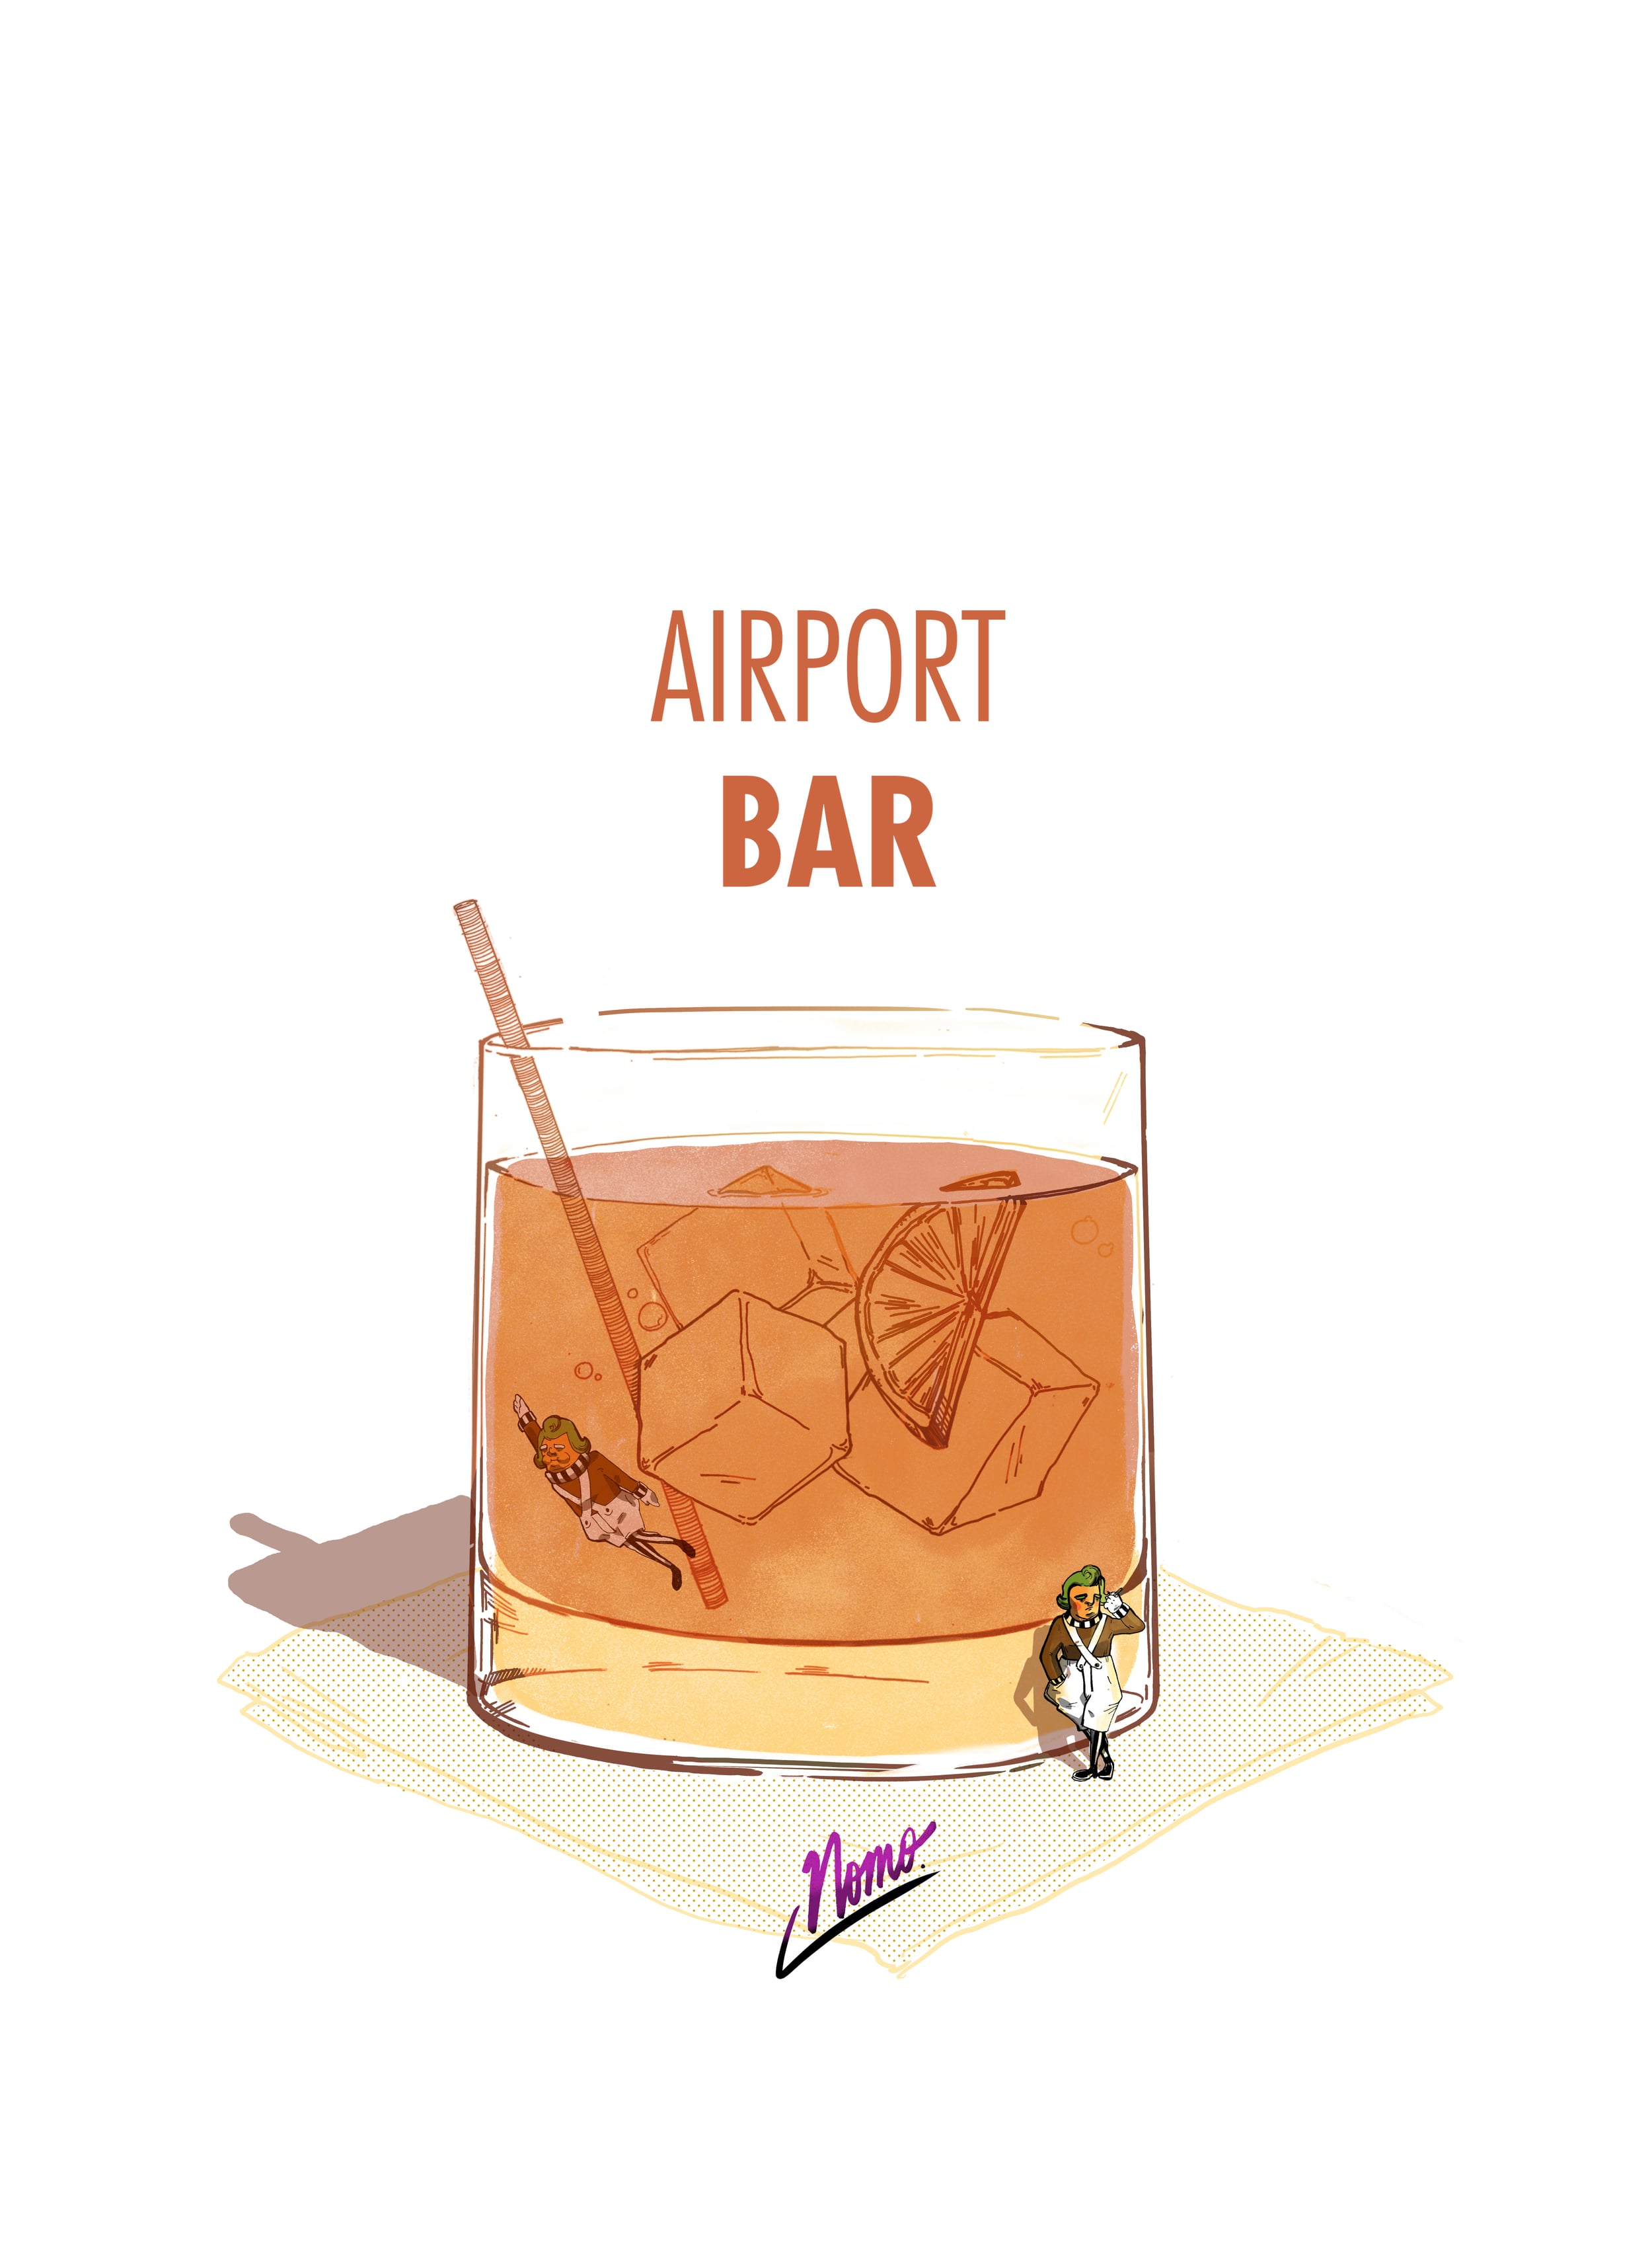 Airport_bar_whiskey.jpg